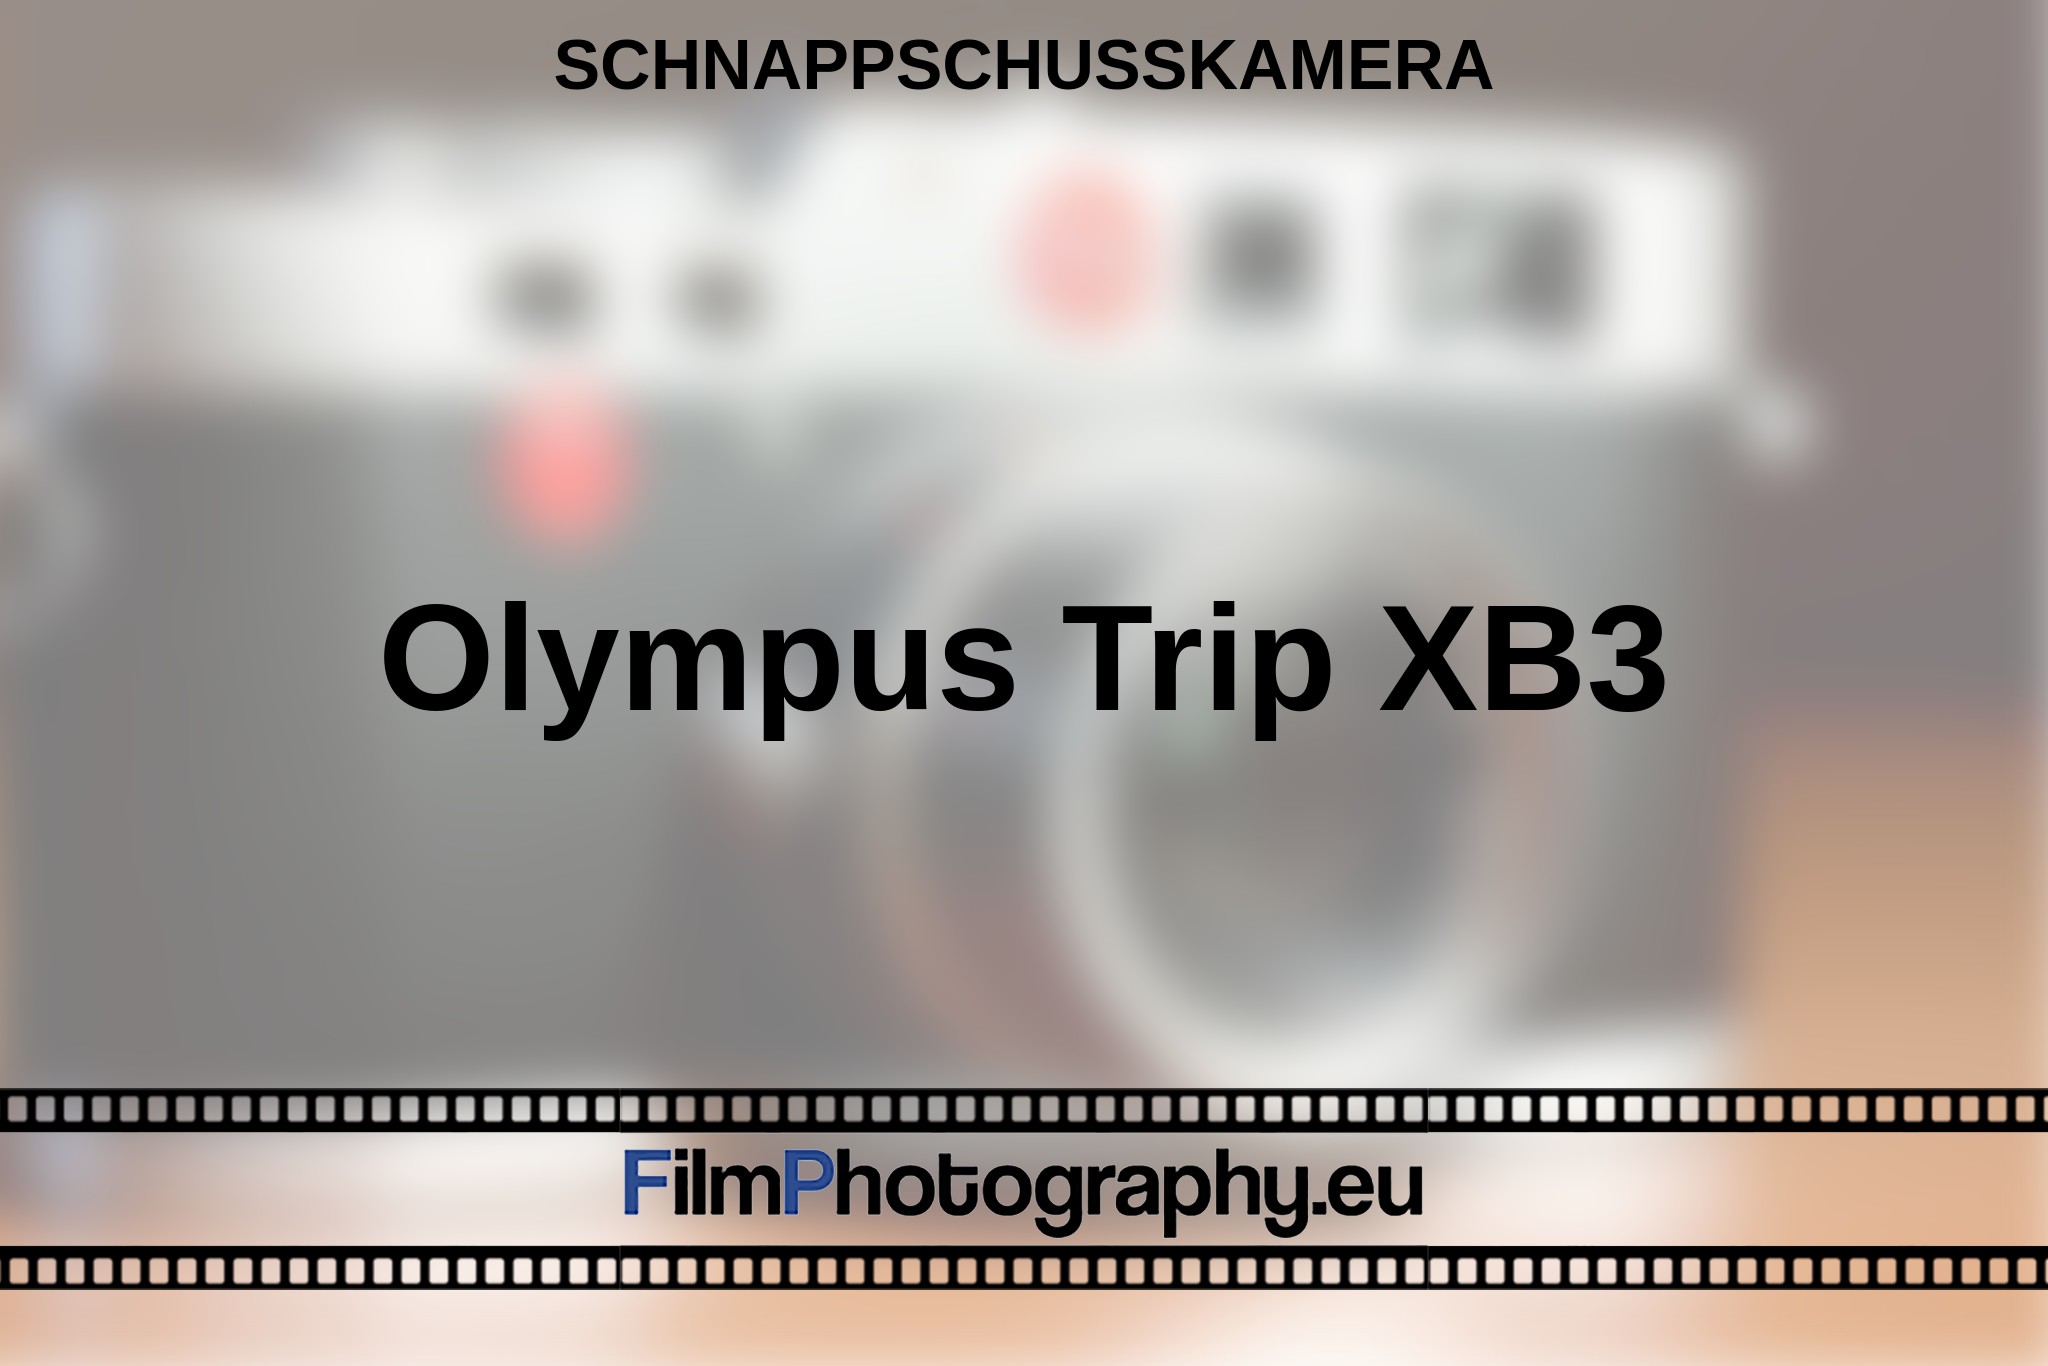 olympus-trip-xb3-schnappschusskamera-bnv.jpg